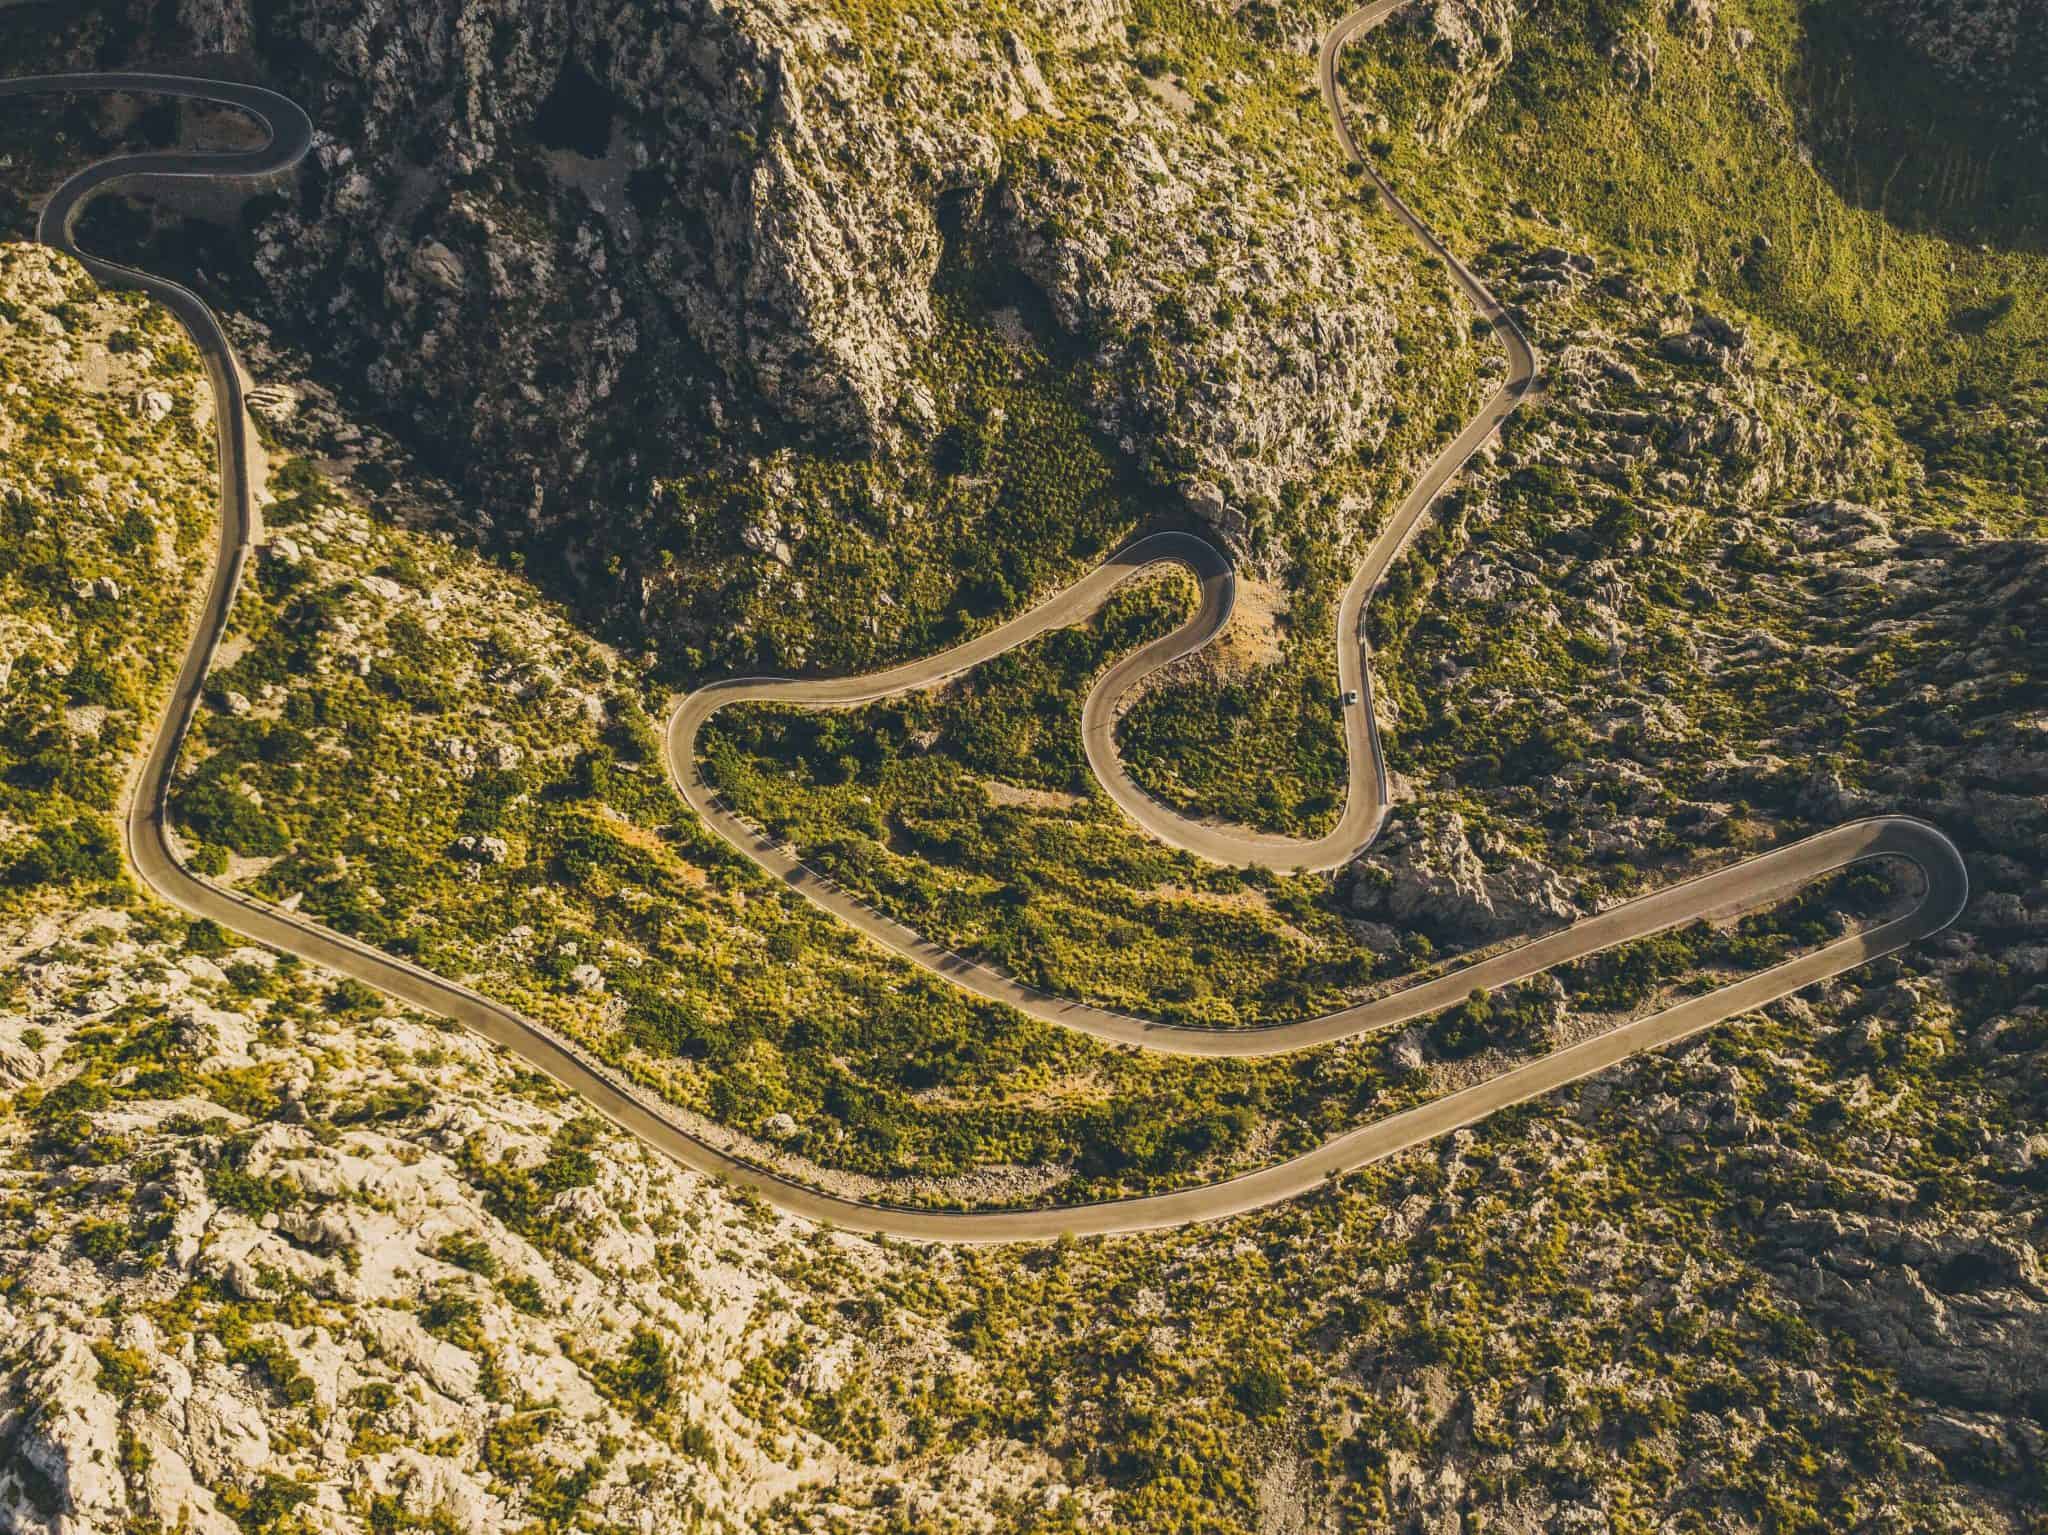 Cycling Sa Calobra in Mallorca - Routes, Bike Hire & More